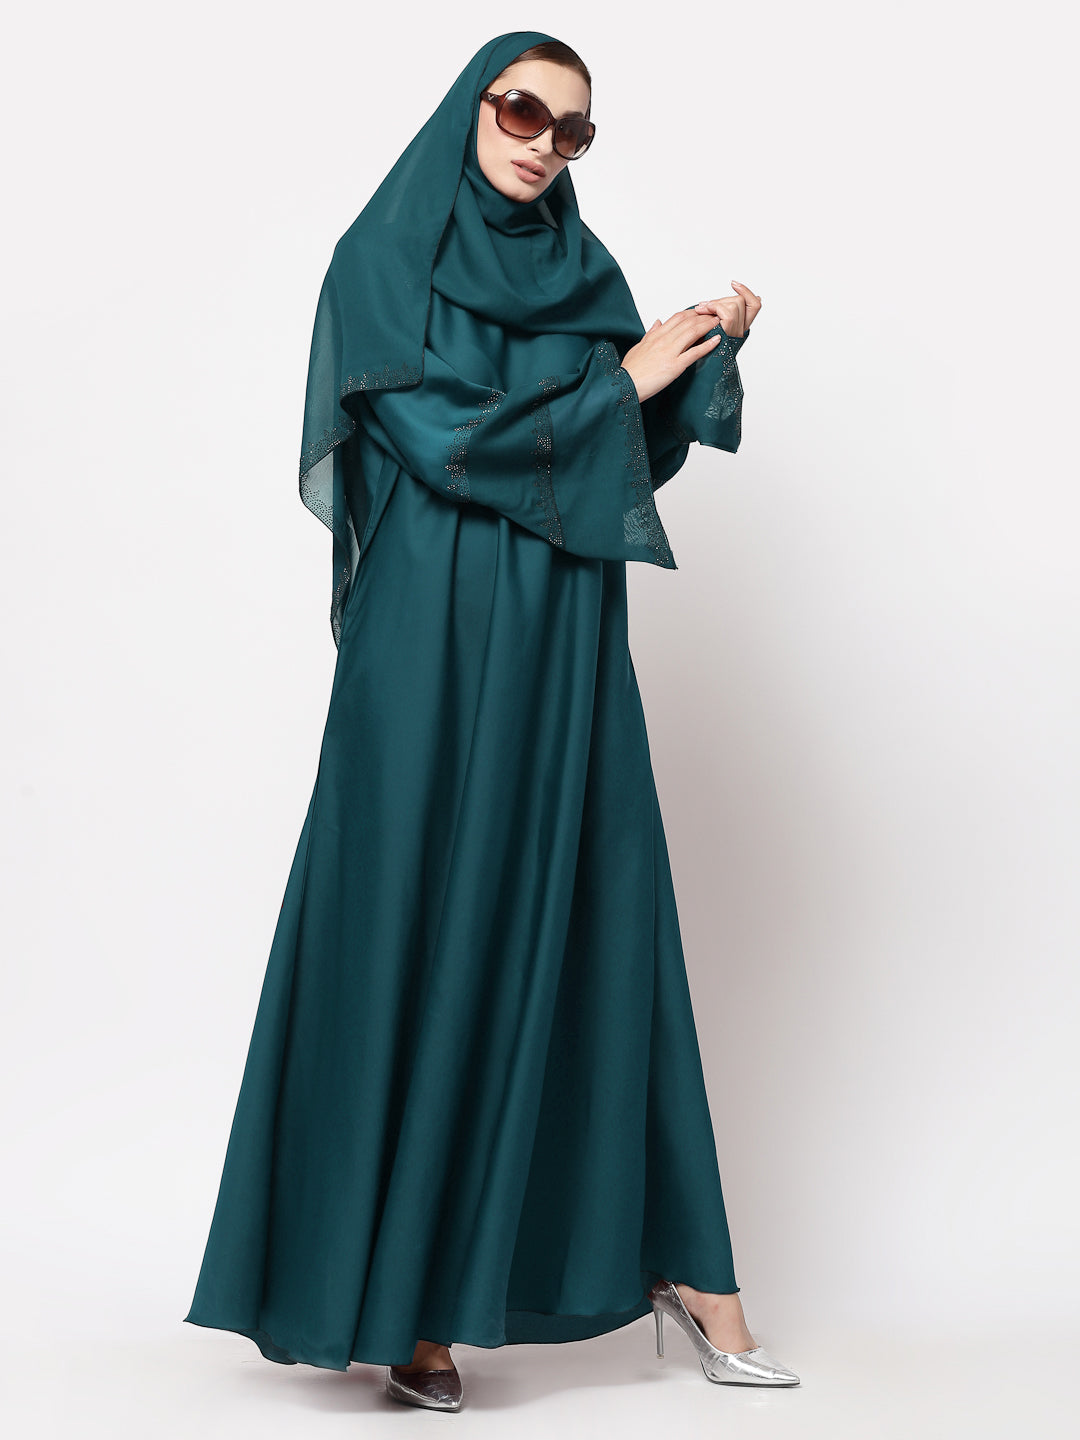 Klotthe Women Turquise Embellished Burqa With Scarves